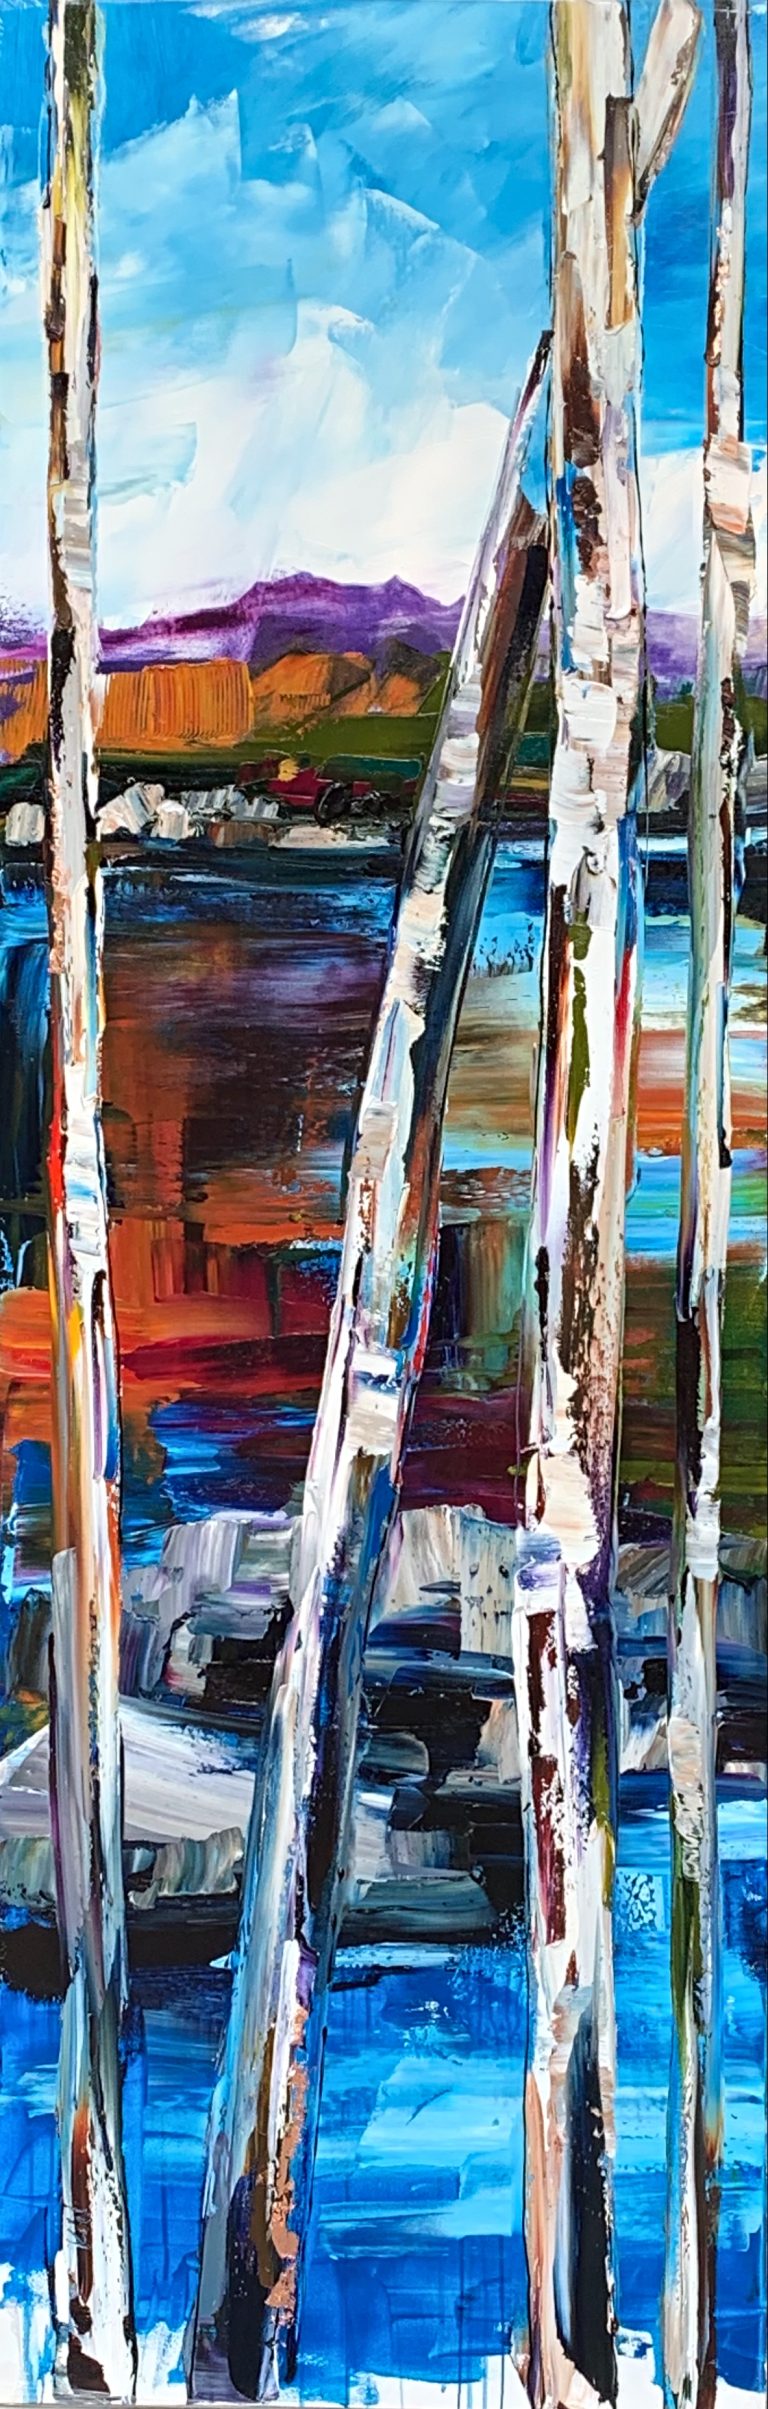 Follow My Tracks 1, mixed media landscape painting by Kimberly Kiel | Effusion Art Gallery + Cast Glass Studio, Invermere BC